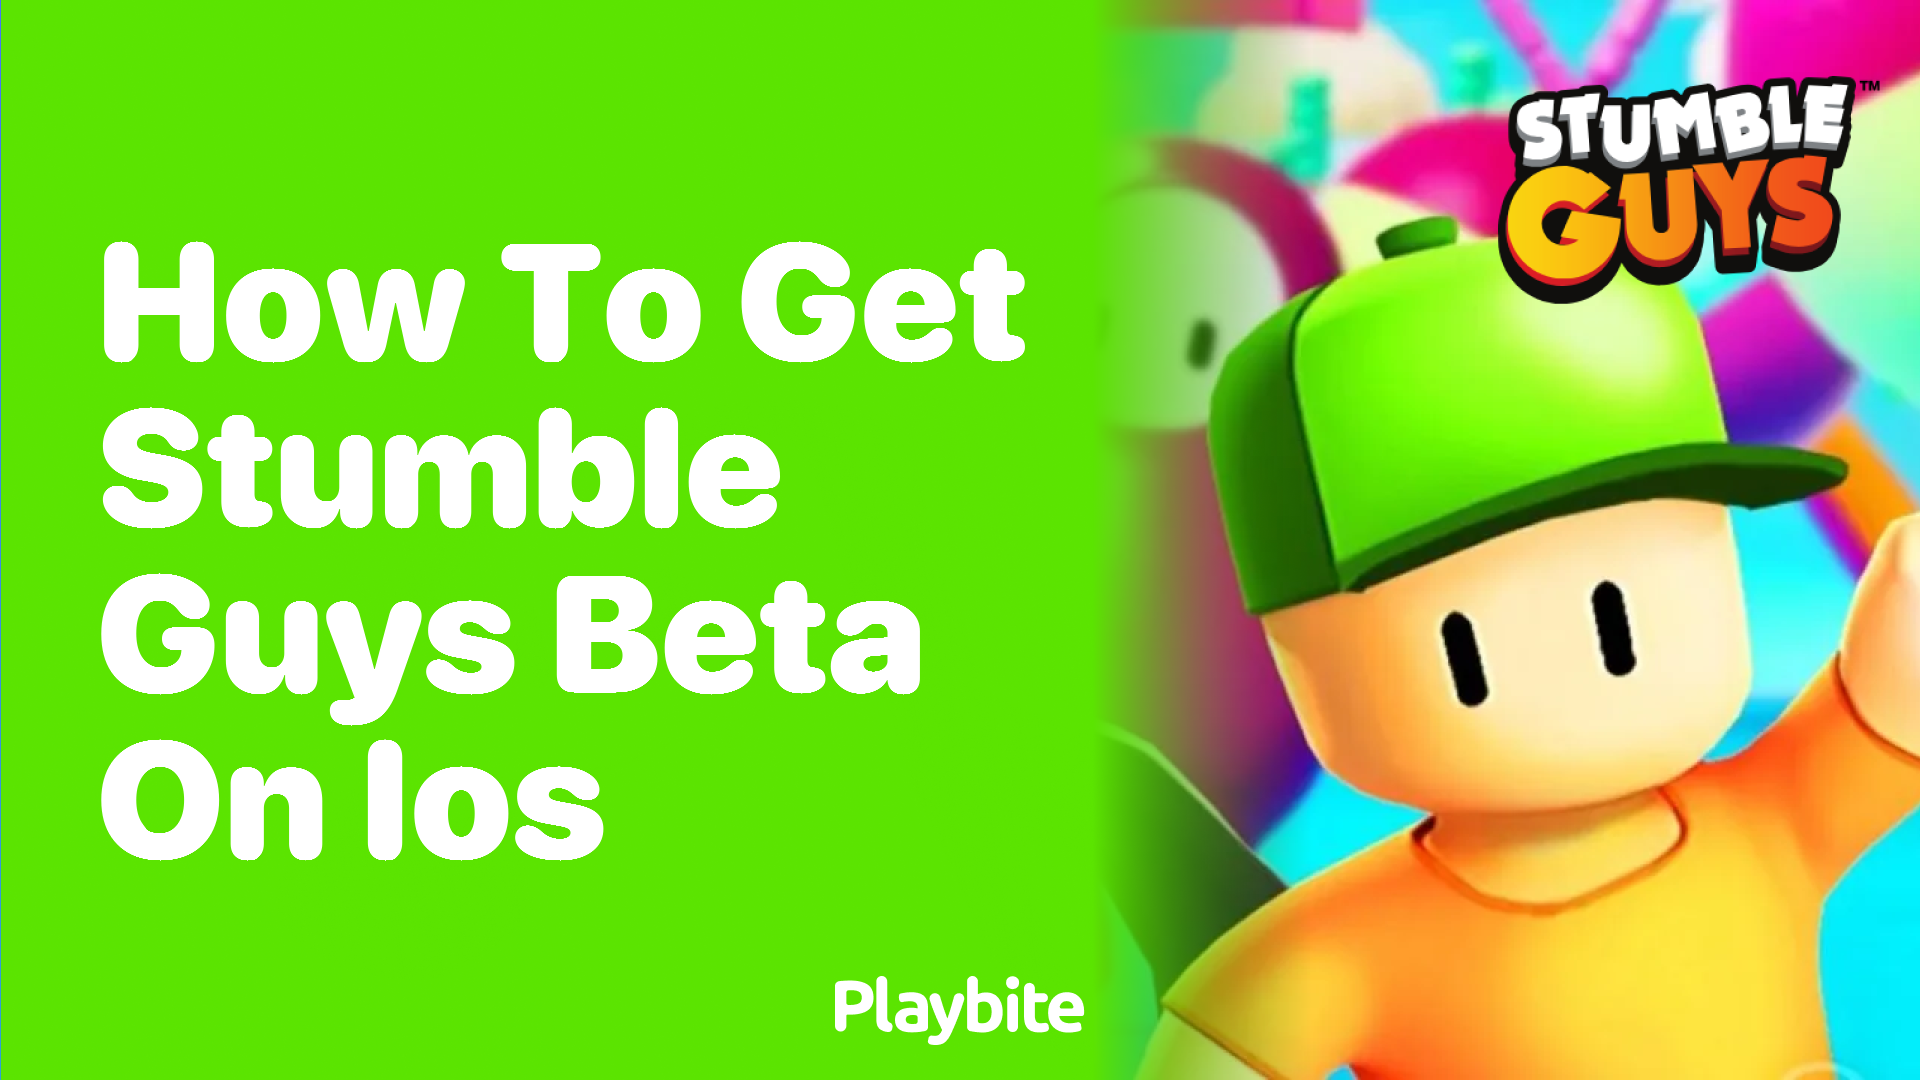 How to Get Stumble Guys Beta on iOS